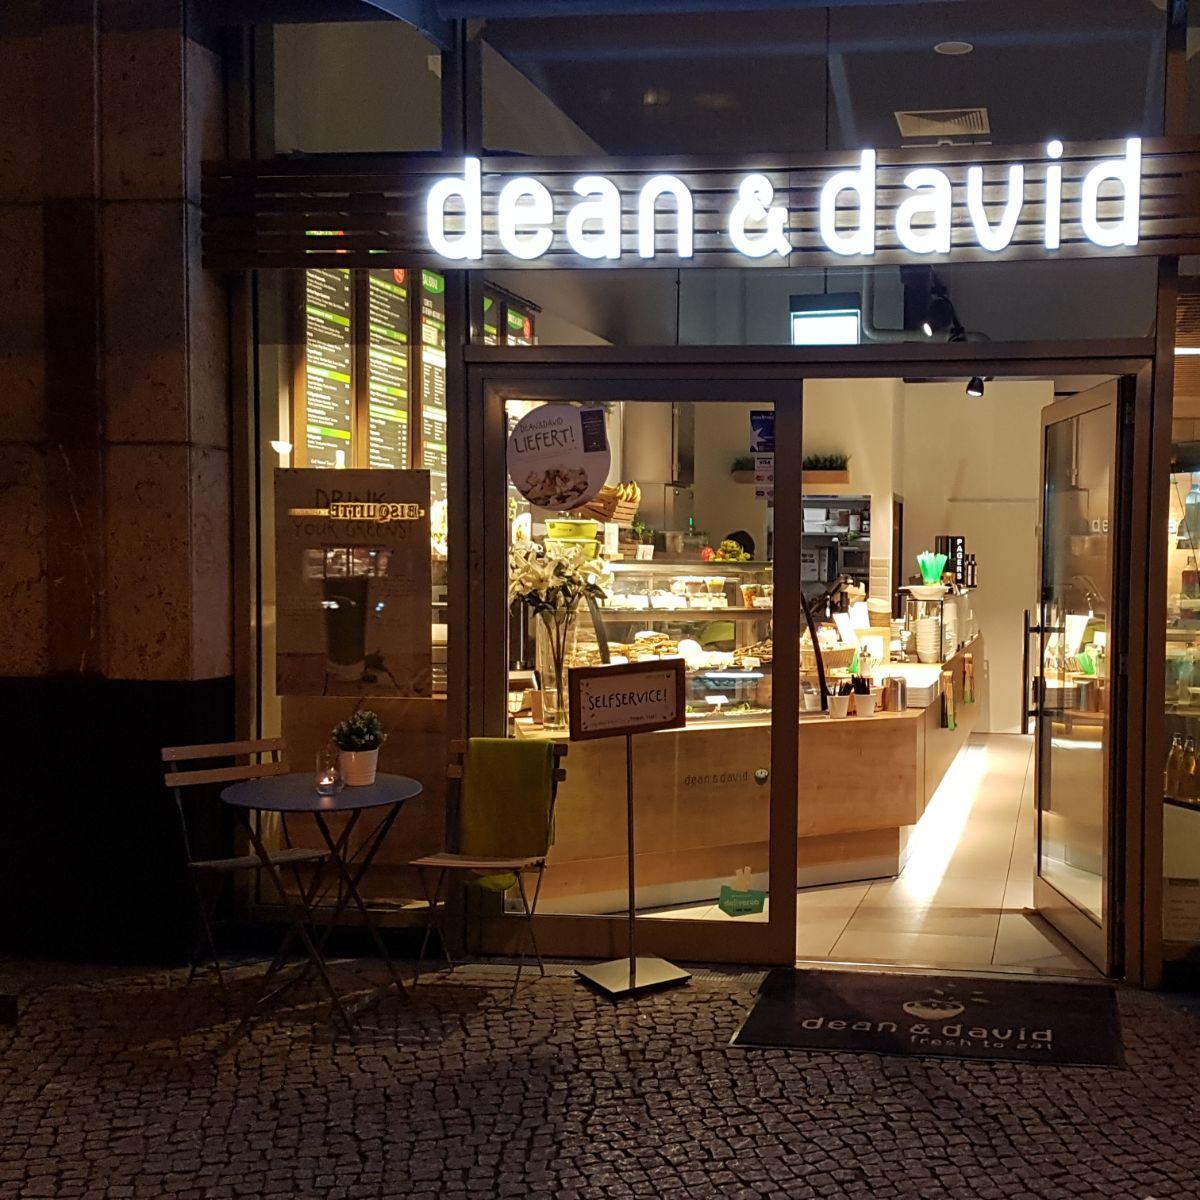 Restaurant "dean&david" in Berlin